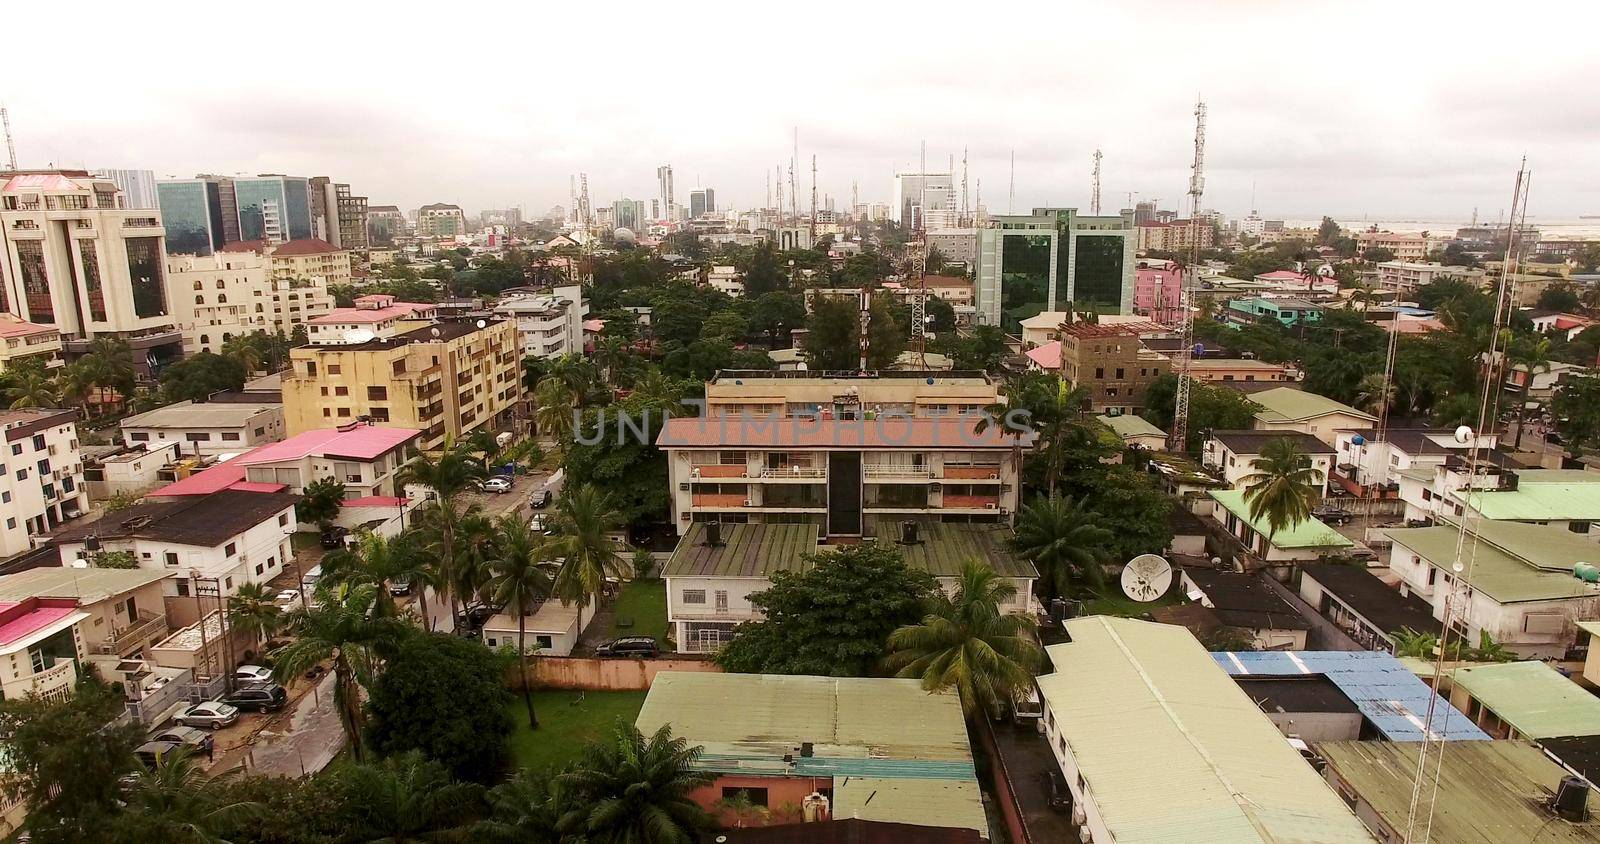 Aerial overhead Lagos, Nigeria by fivepointsix